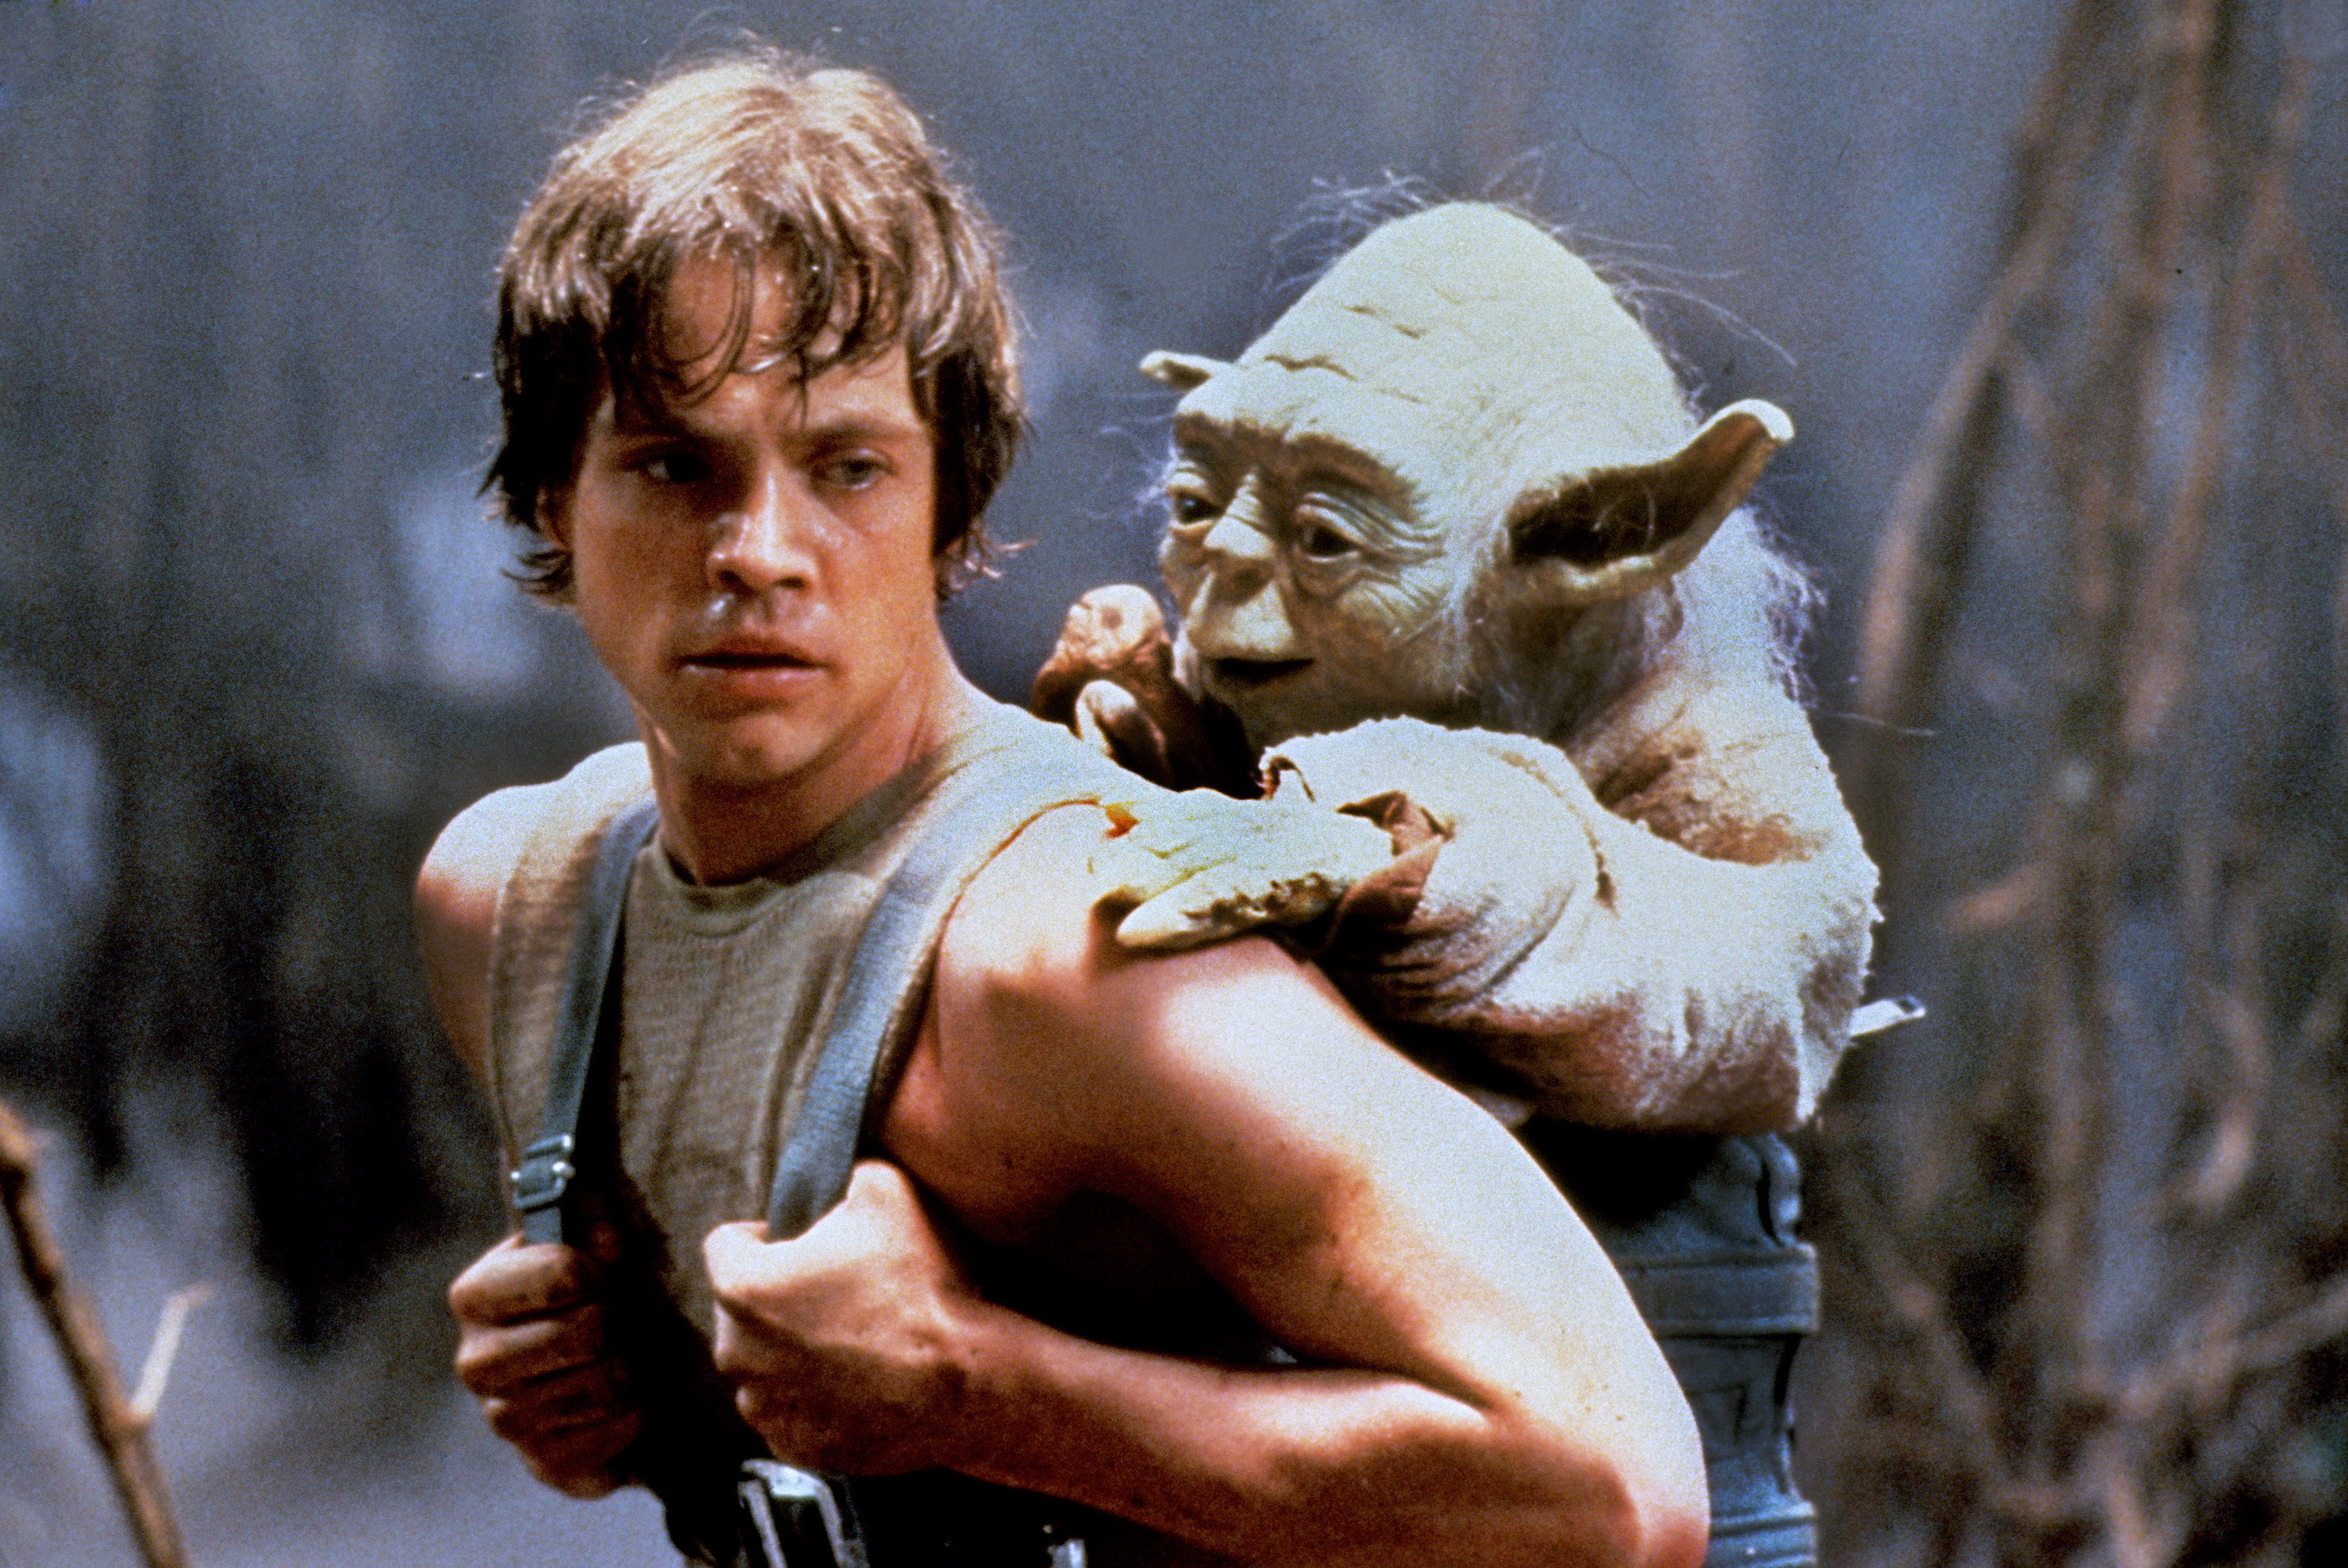 Luke Skywalker carrying Yoda on his back